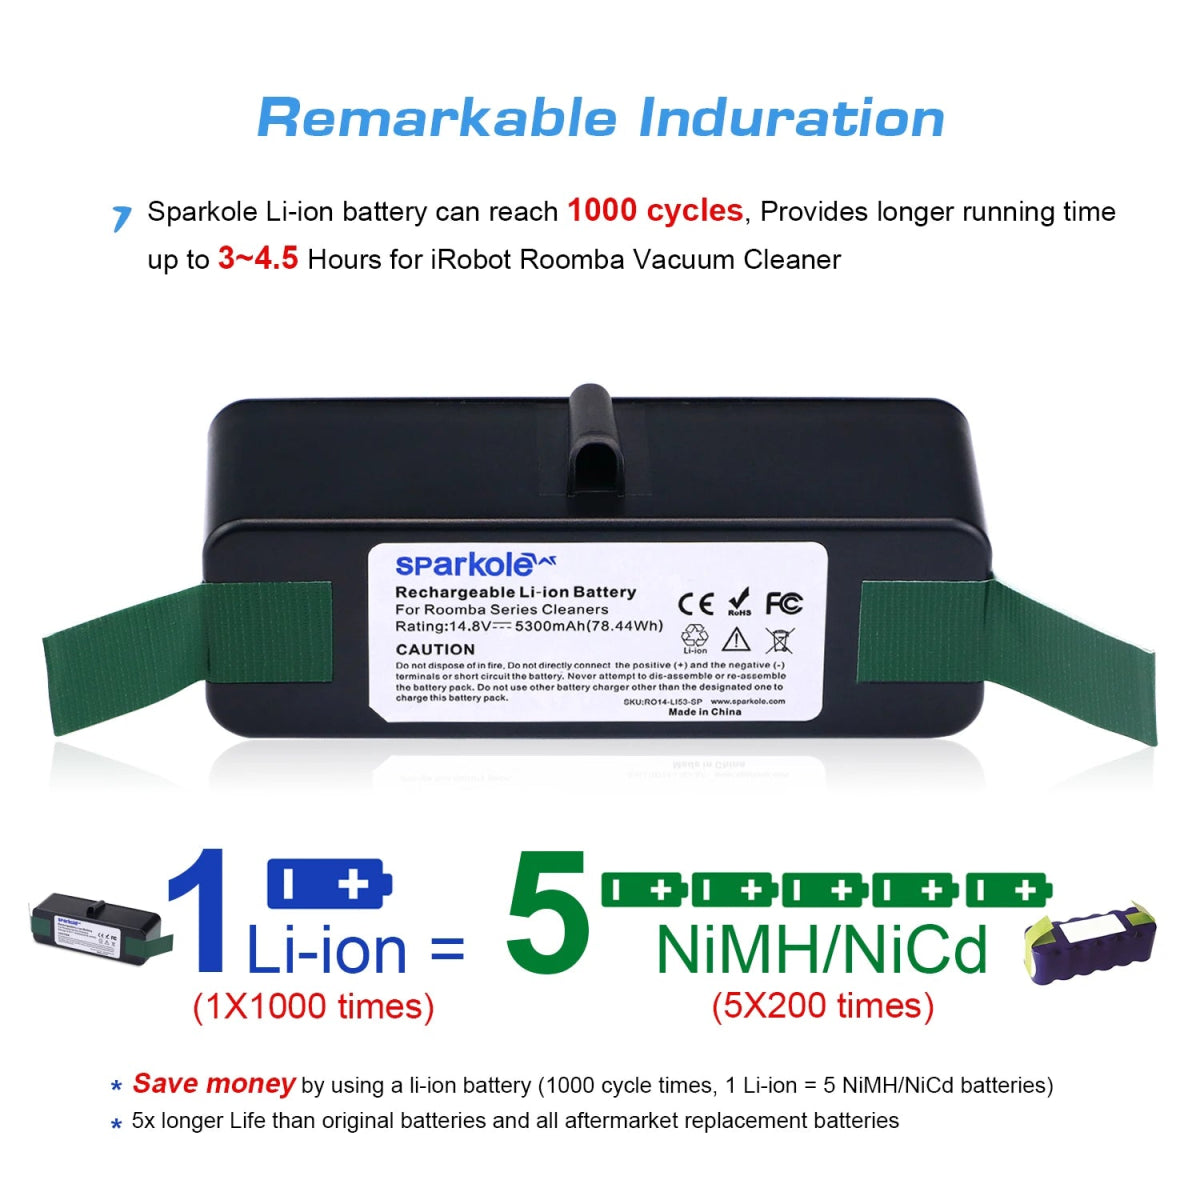 5.3 Ah 14.8V Li-ion Battery for iRobot Roomba 500 600 700 800 Series 555 560 580 620 630 650 760 770 780 790 870 880 R3 [HAP]